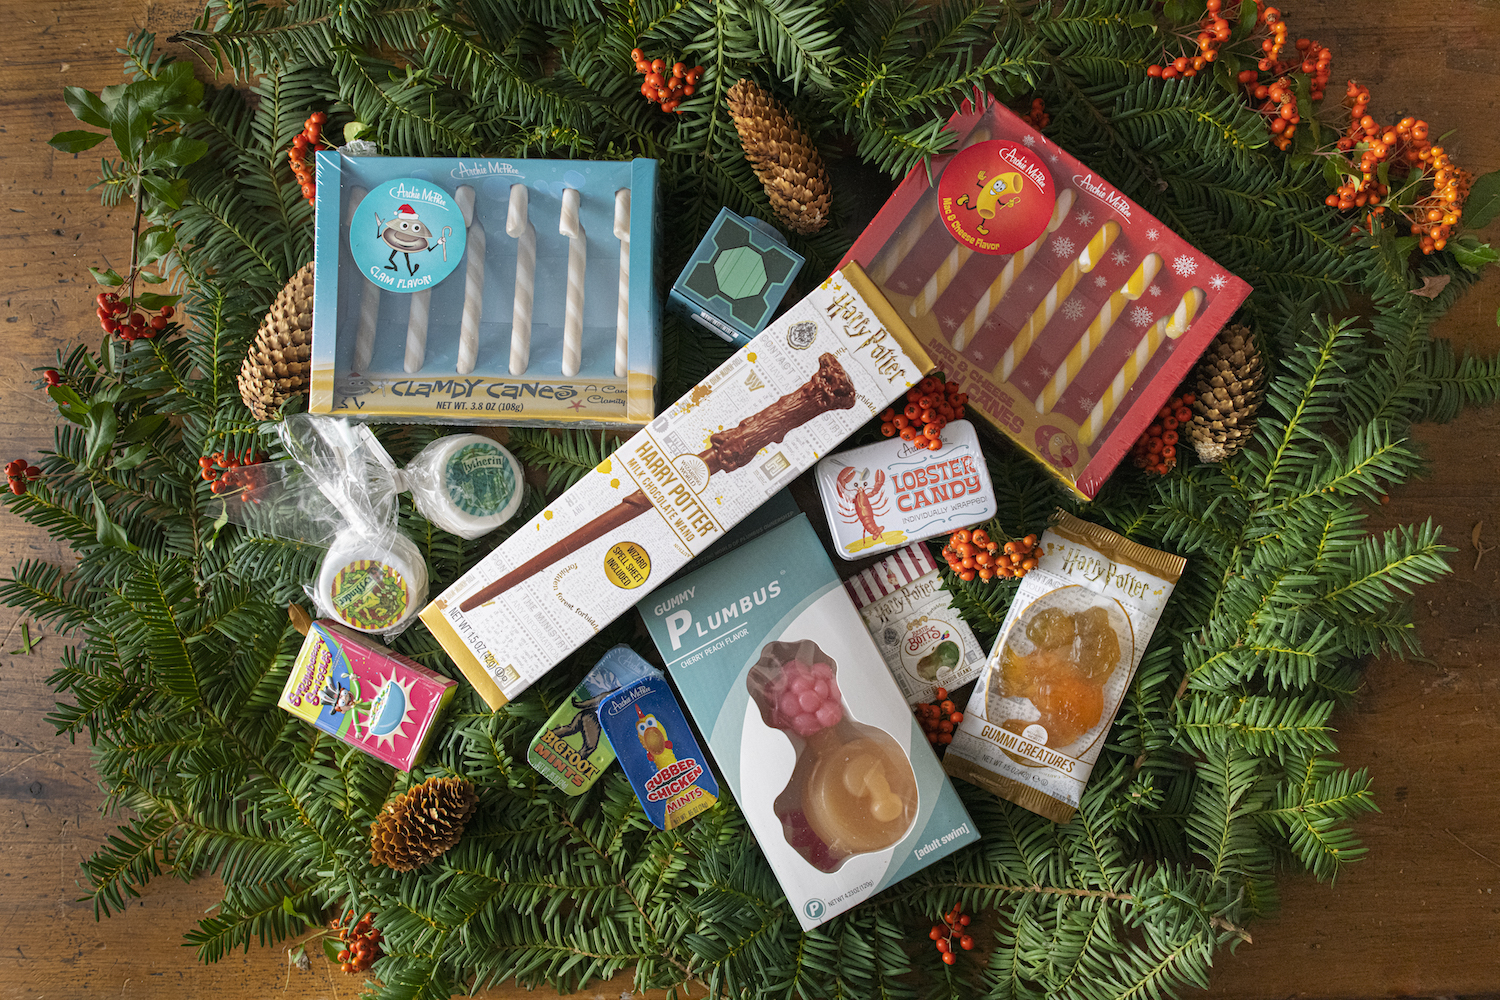 https://edibleidaho.ediblecommunities.com/sites/default/files/images/article/holiday-stocking-stuffers-edible-idaho.jpg